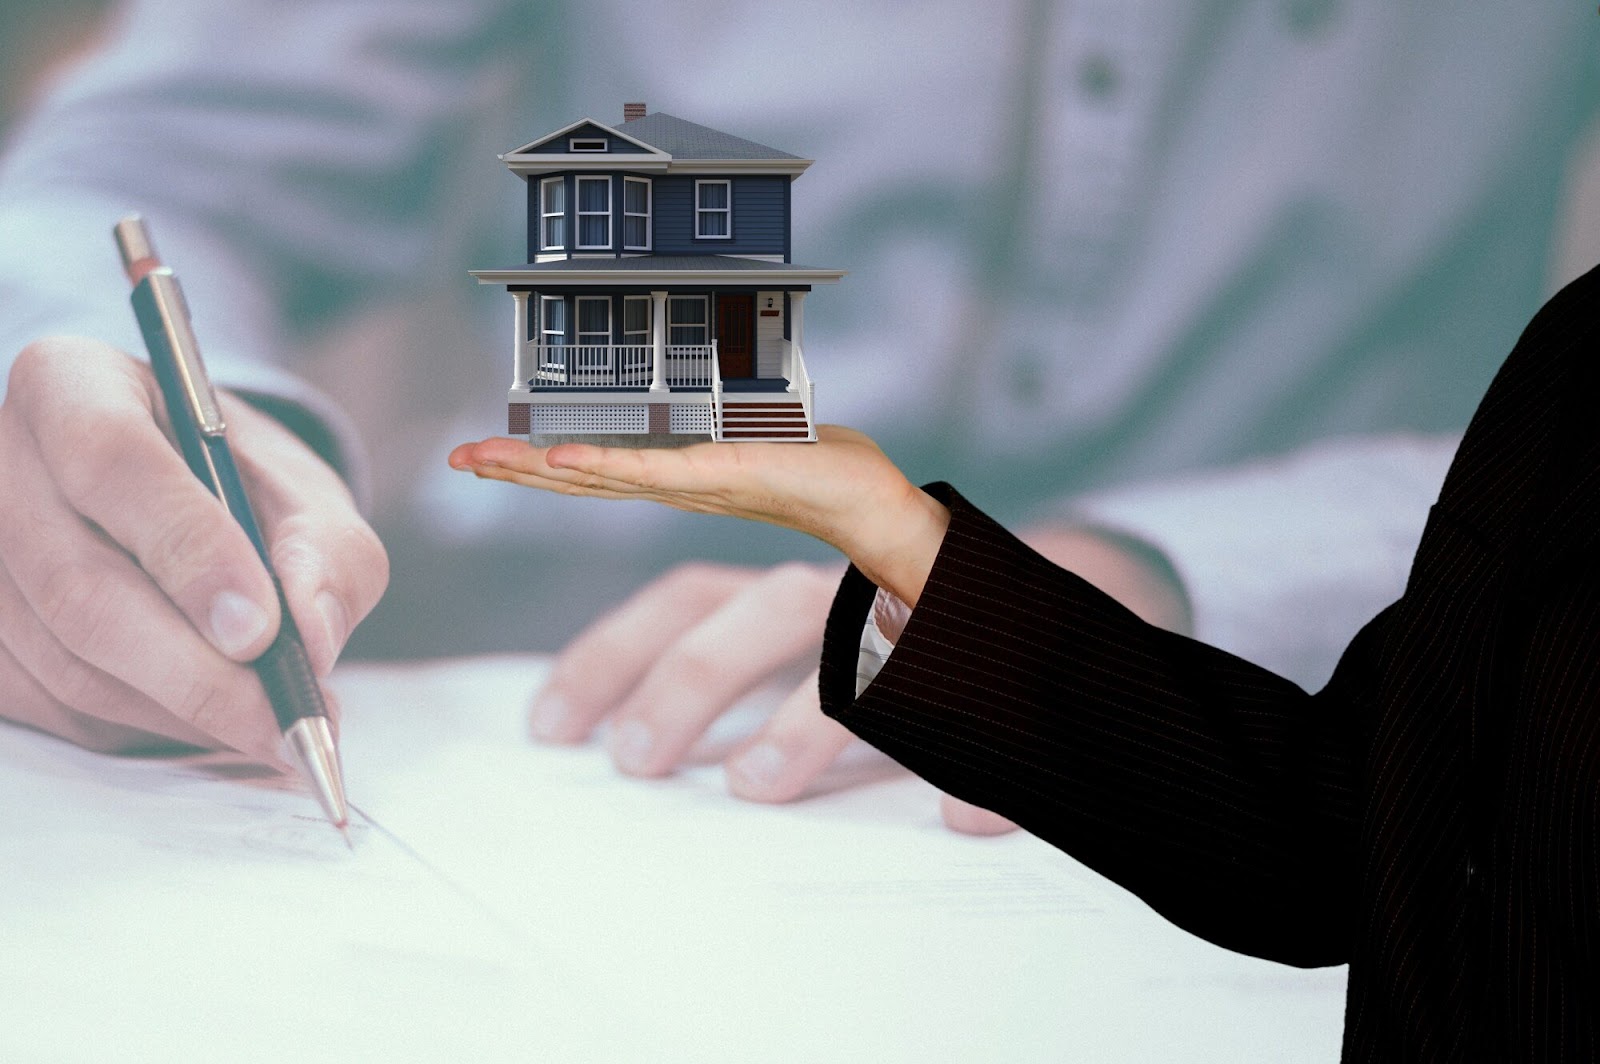 Image source: https://pixabay.com/photos/house-property-real-estate-mortgage-5902665/